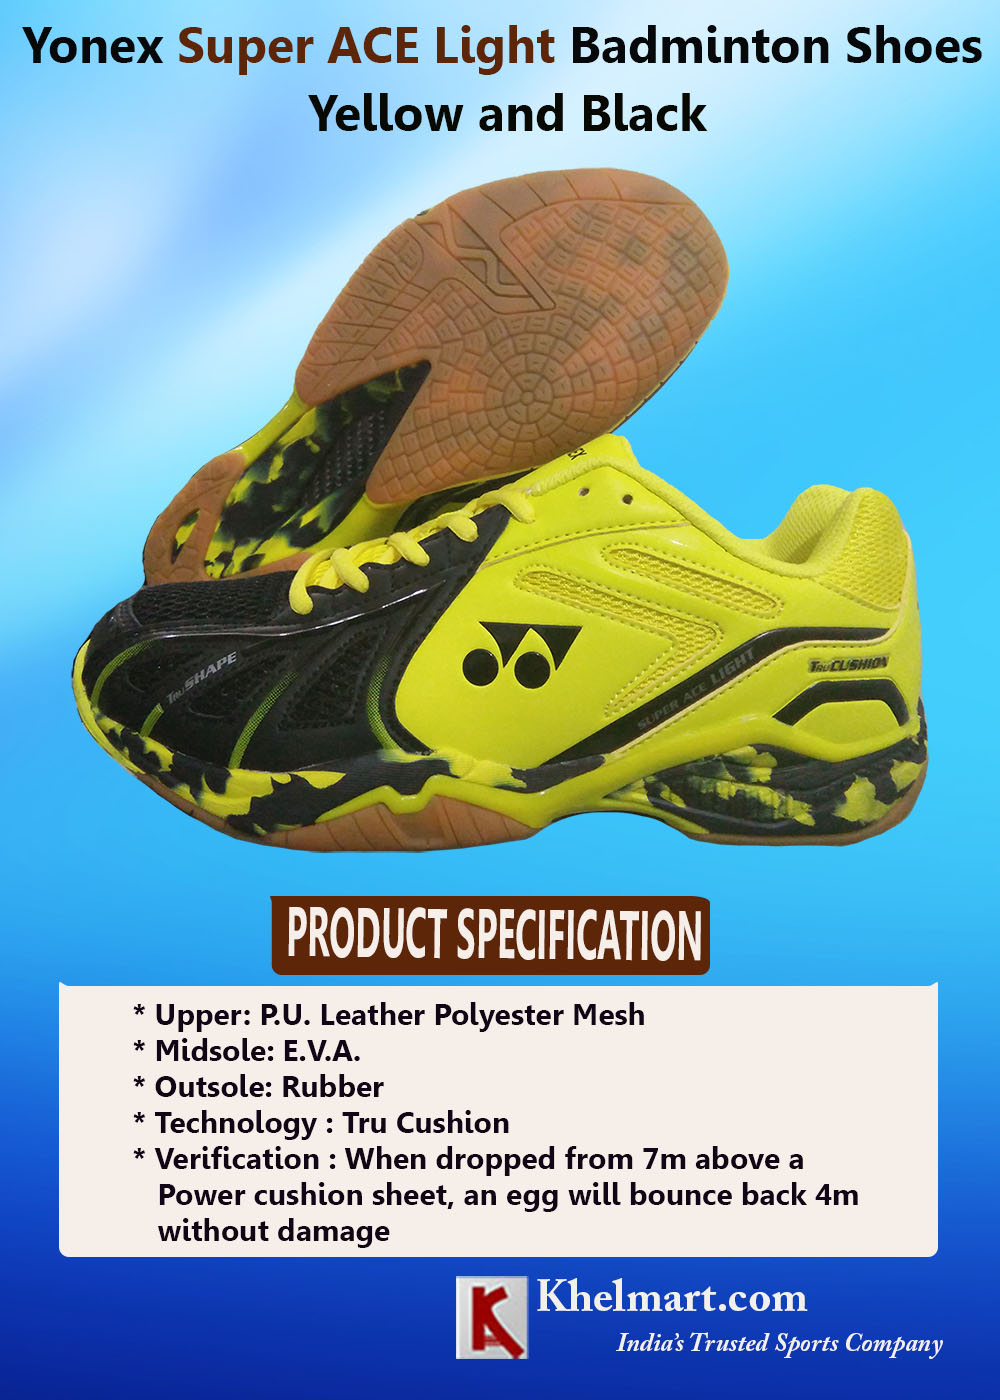 6 Variants of Yonex Super ACE Light Badminton Shoes | Khelmart